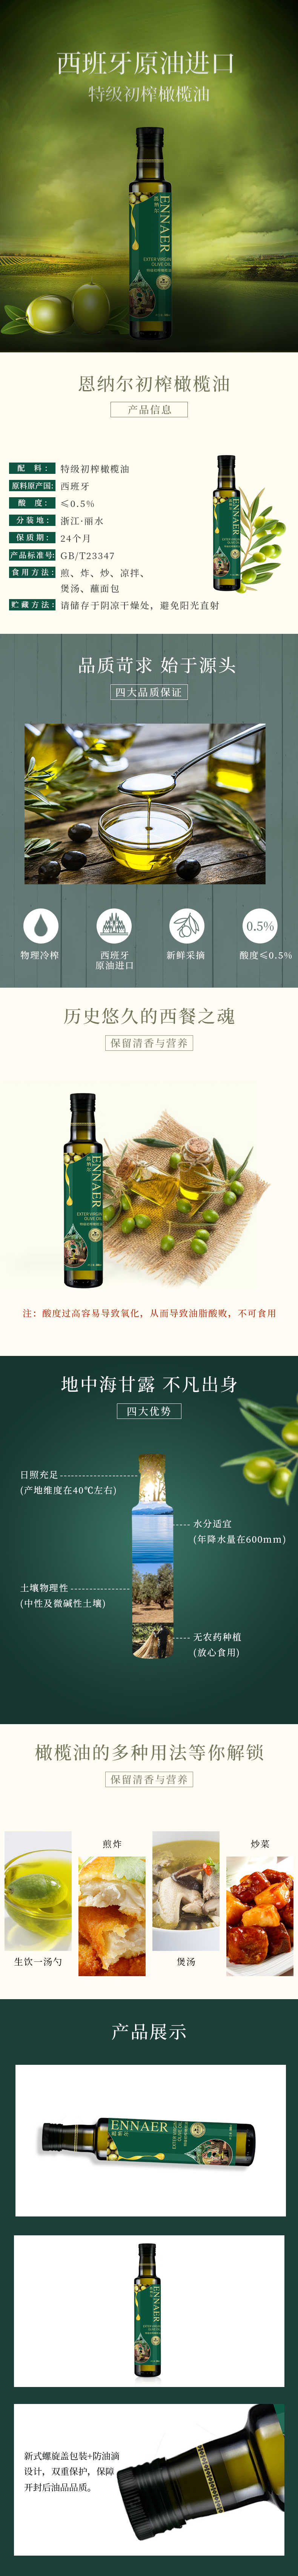 500ml单瓶橄榄油详情页面新.jpg